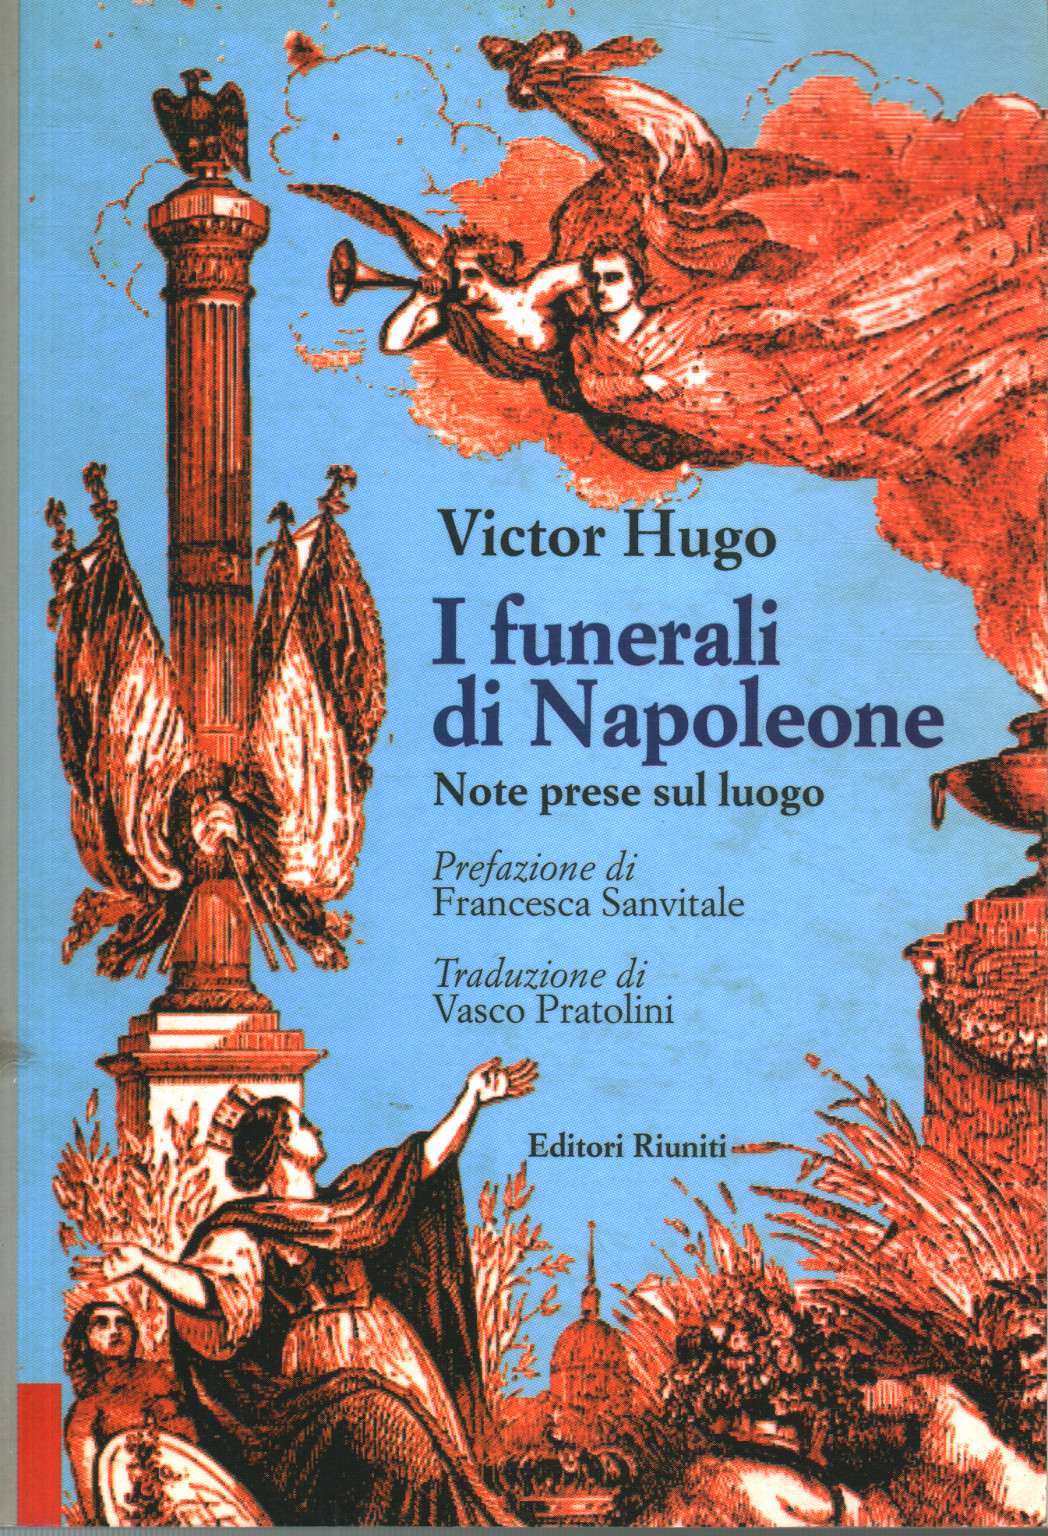 The funeral of Napoleon, Victor Hugo